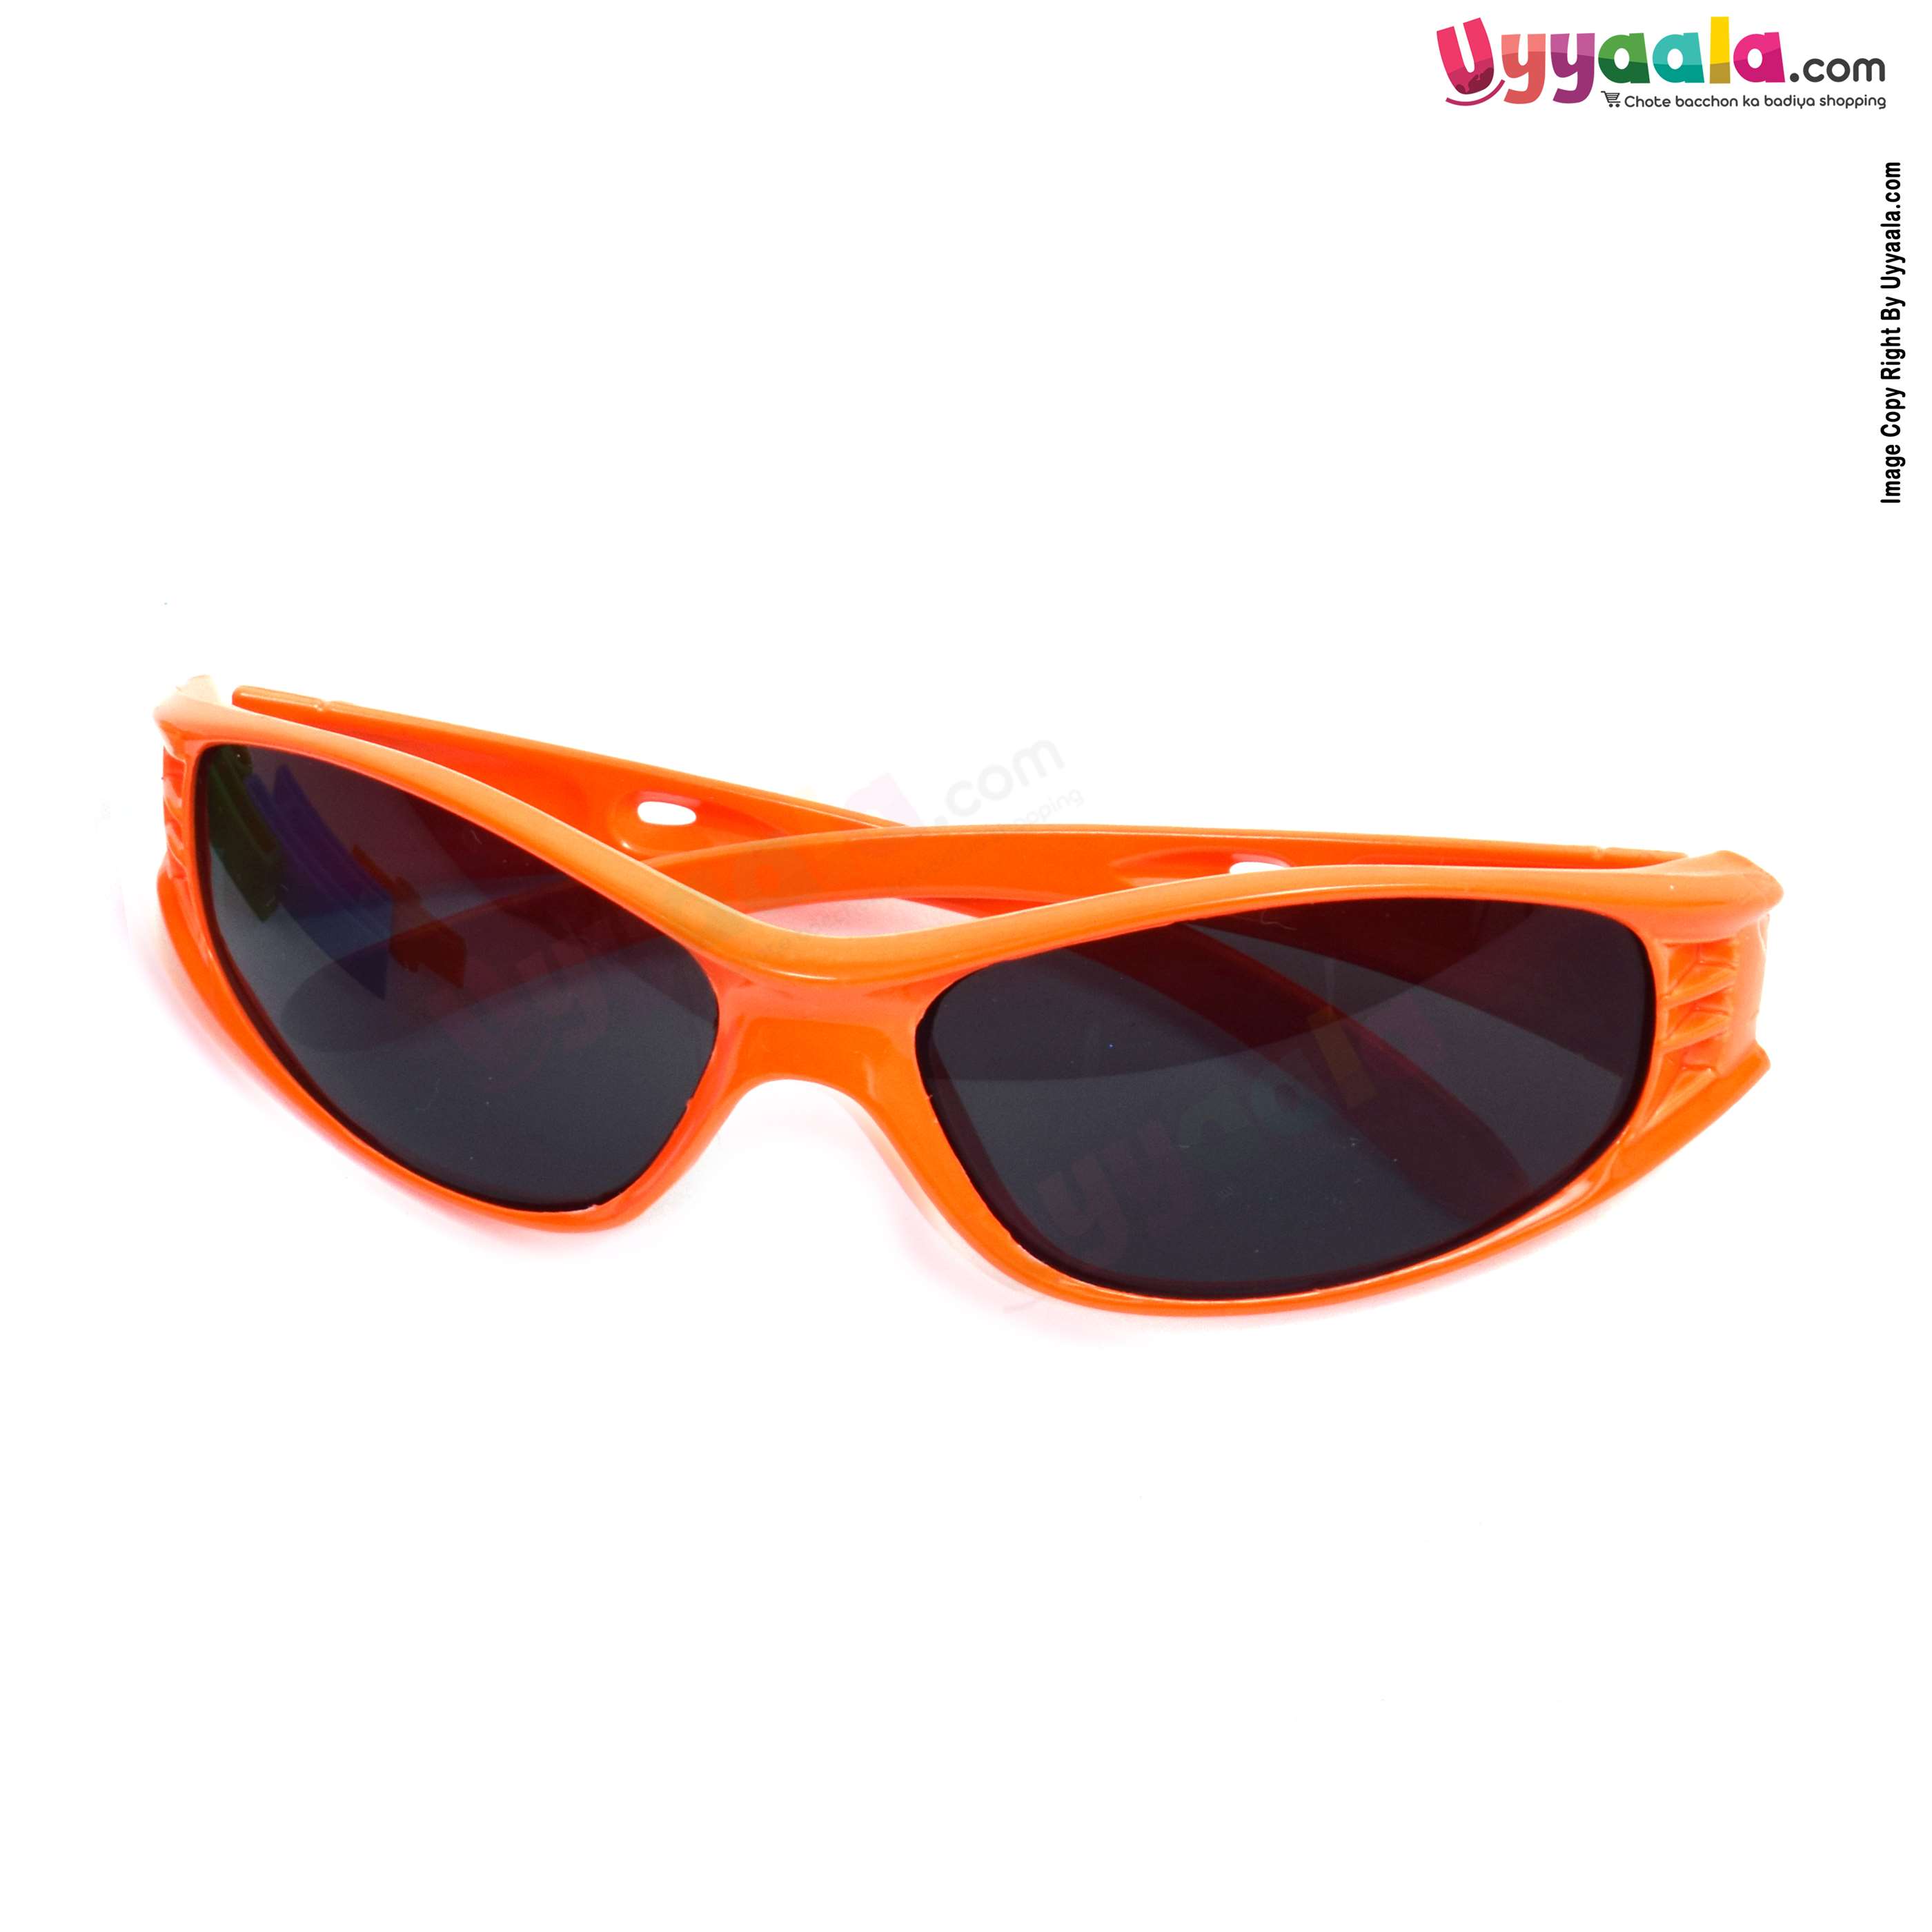 Stylish cat-eye sports sunglasses for kids - orange, 1 - 8 years